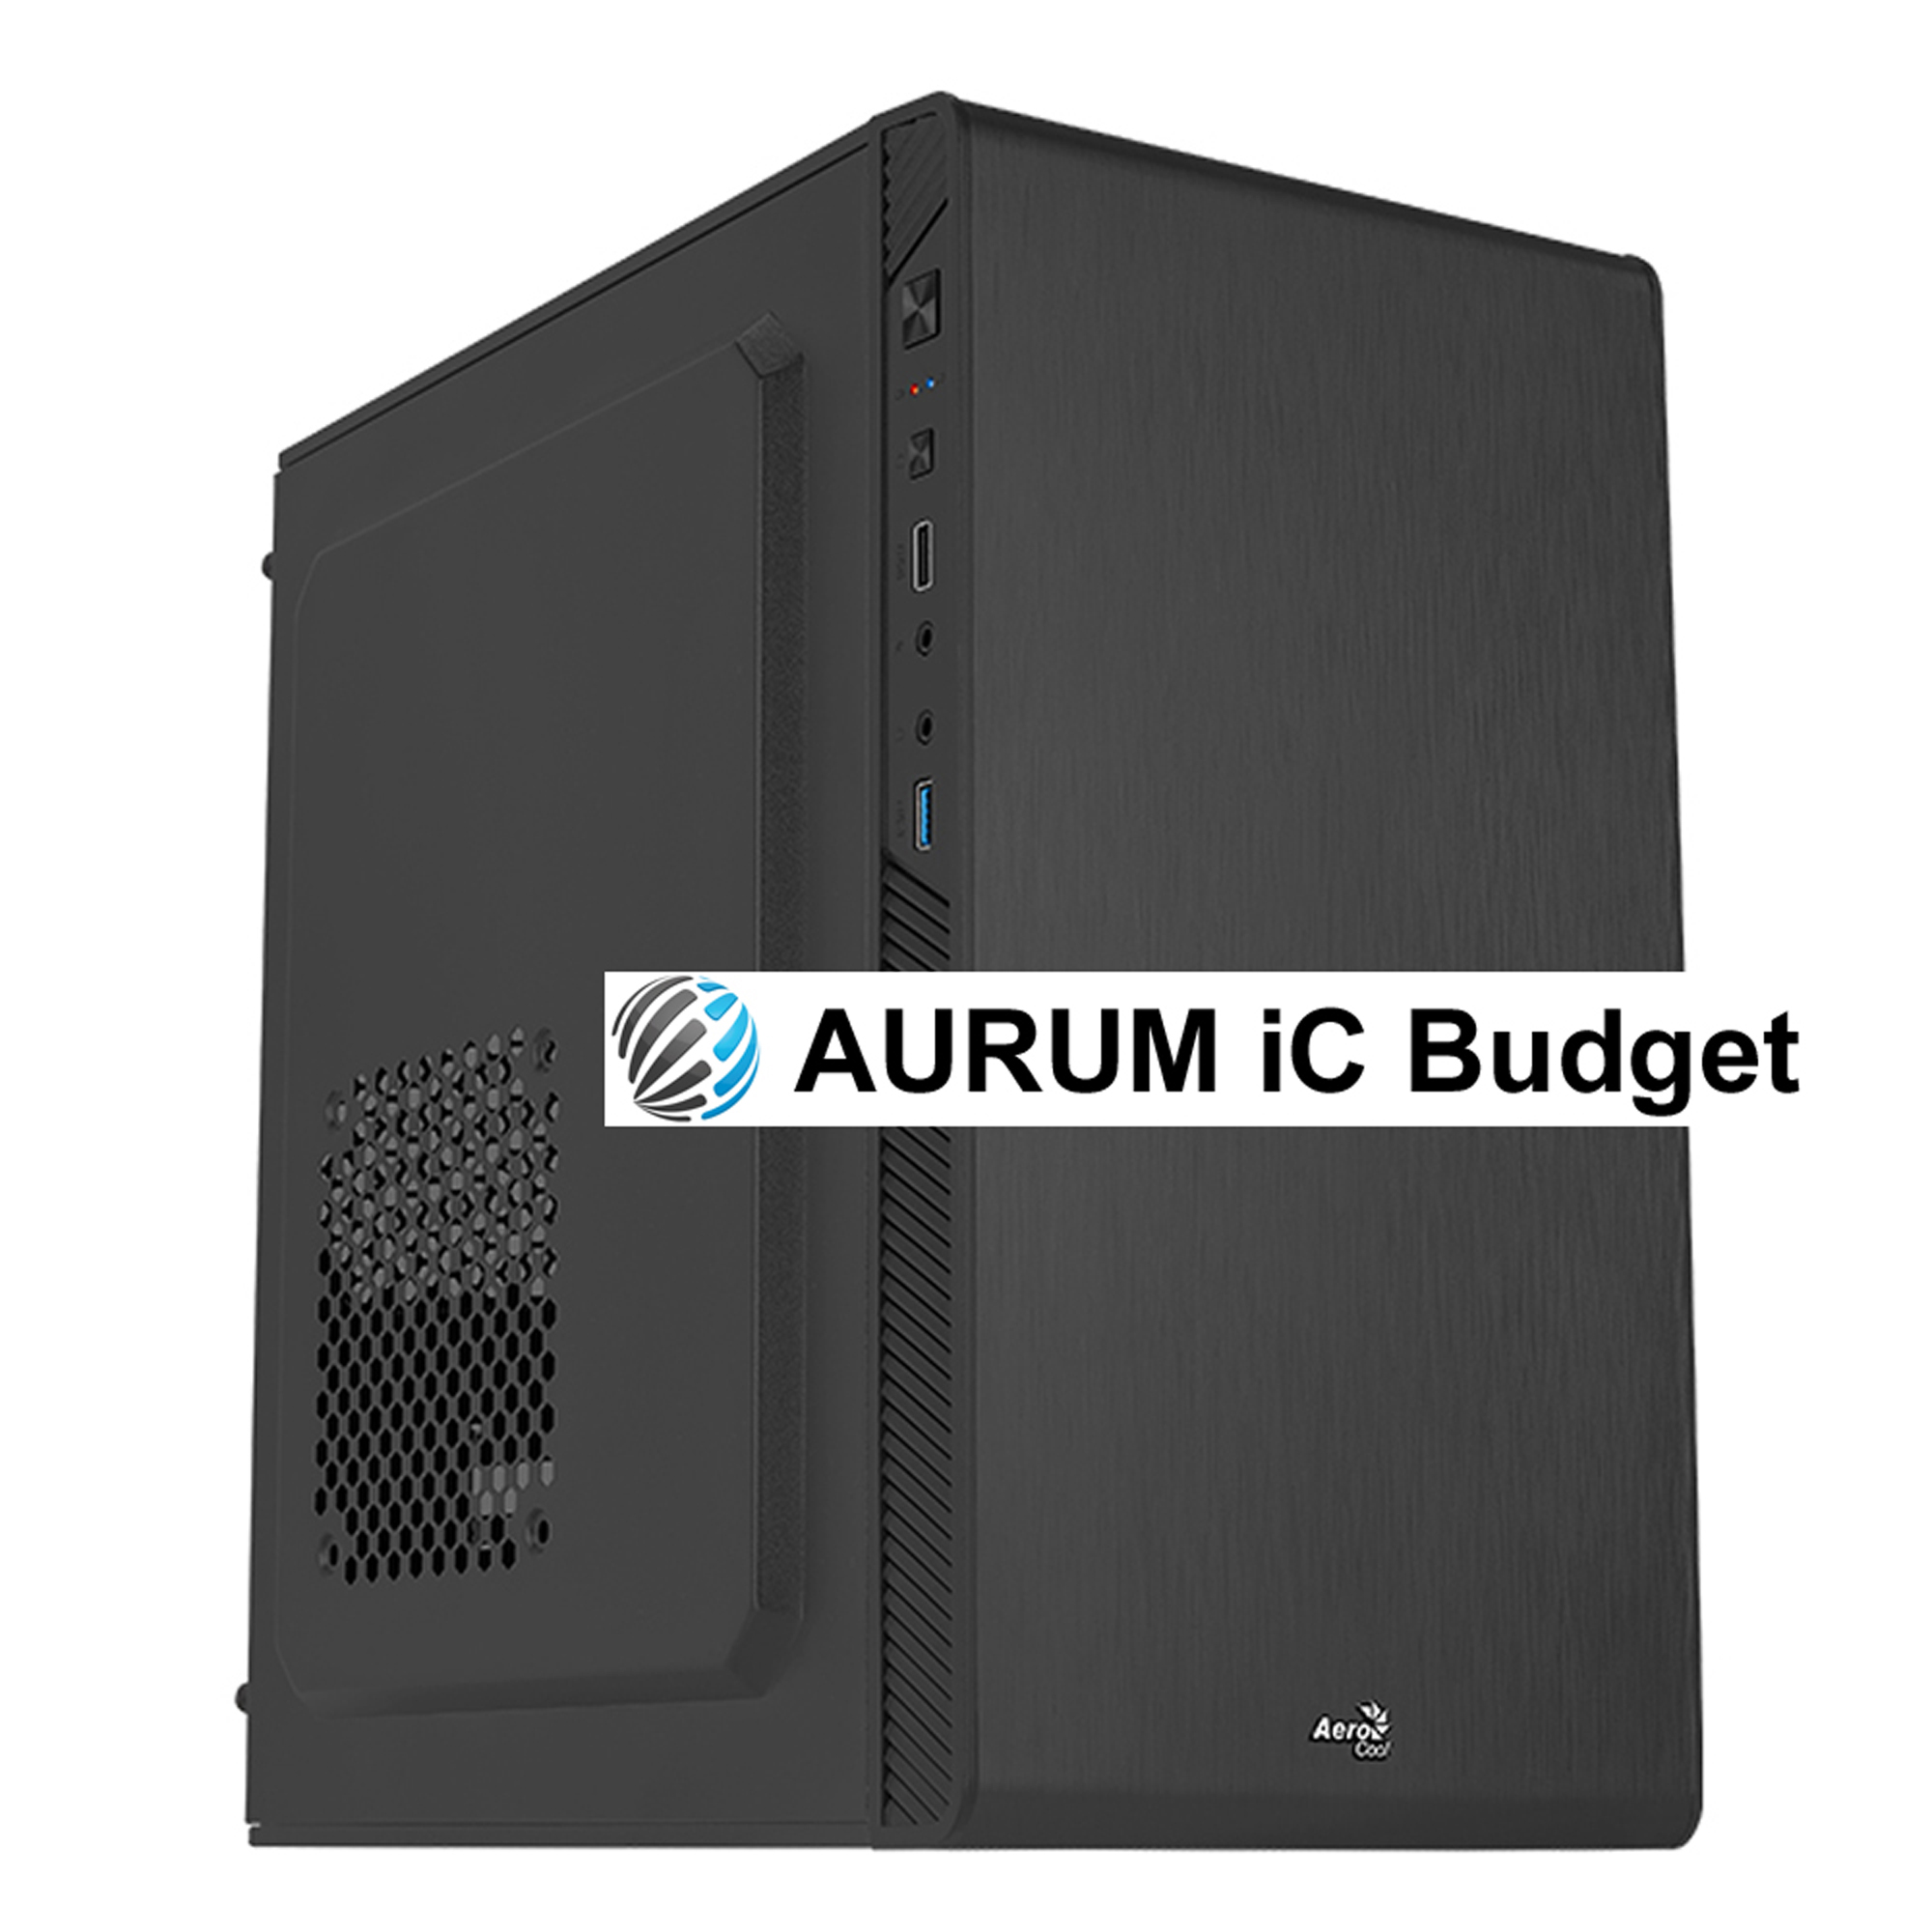 AURUM III, 11 PC-Desktop, GB 8 iC HYPTECH GB 240 Budget SSD Windows Pro, RAM,